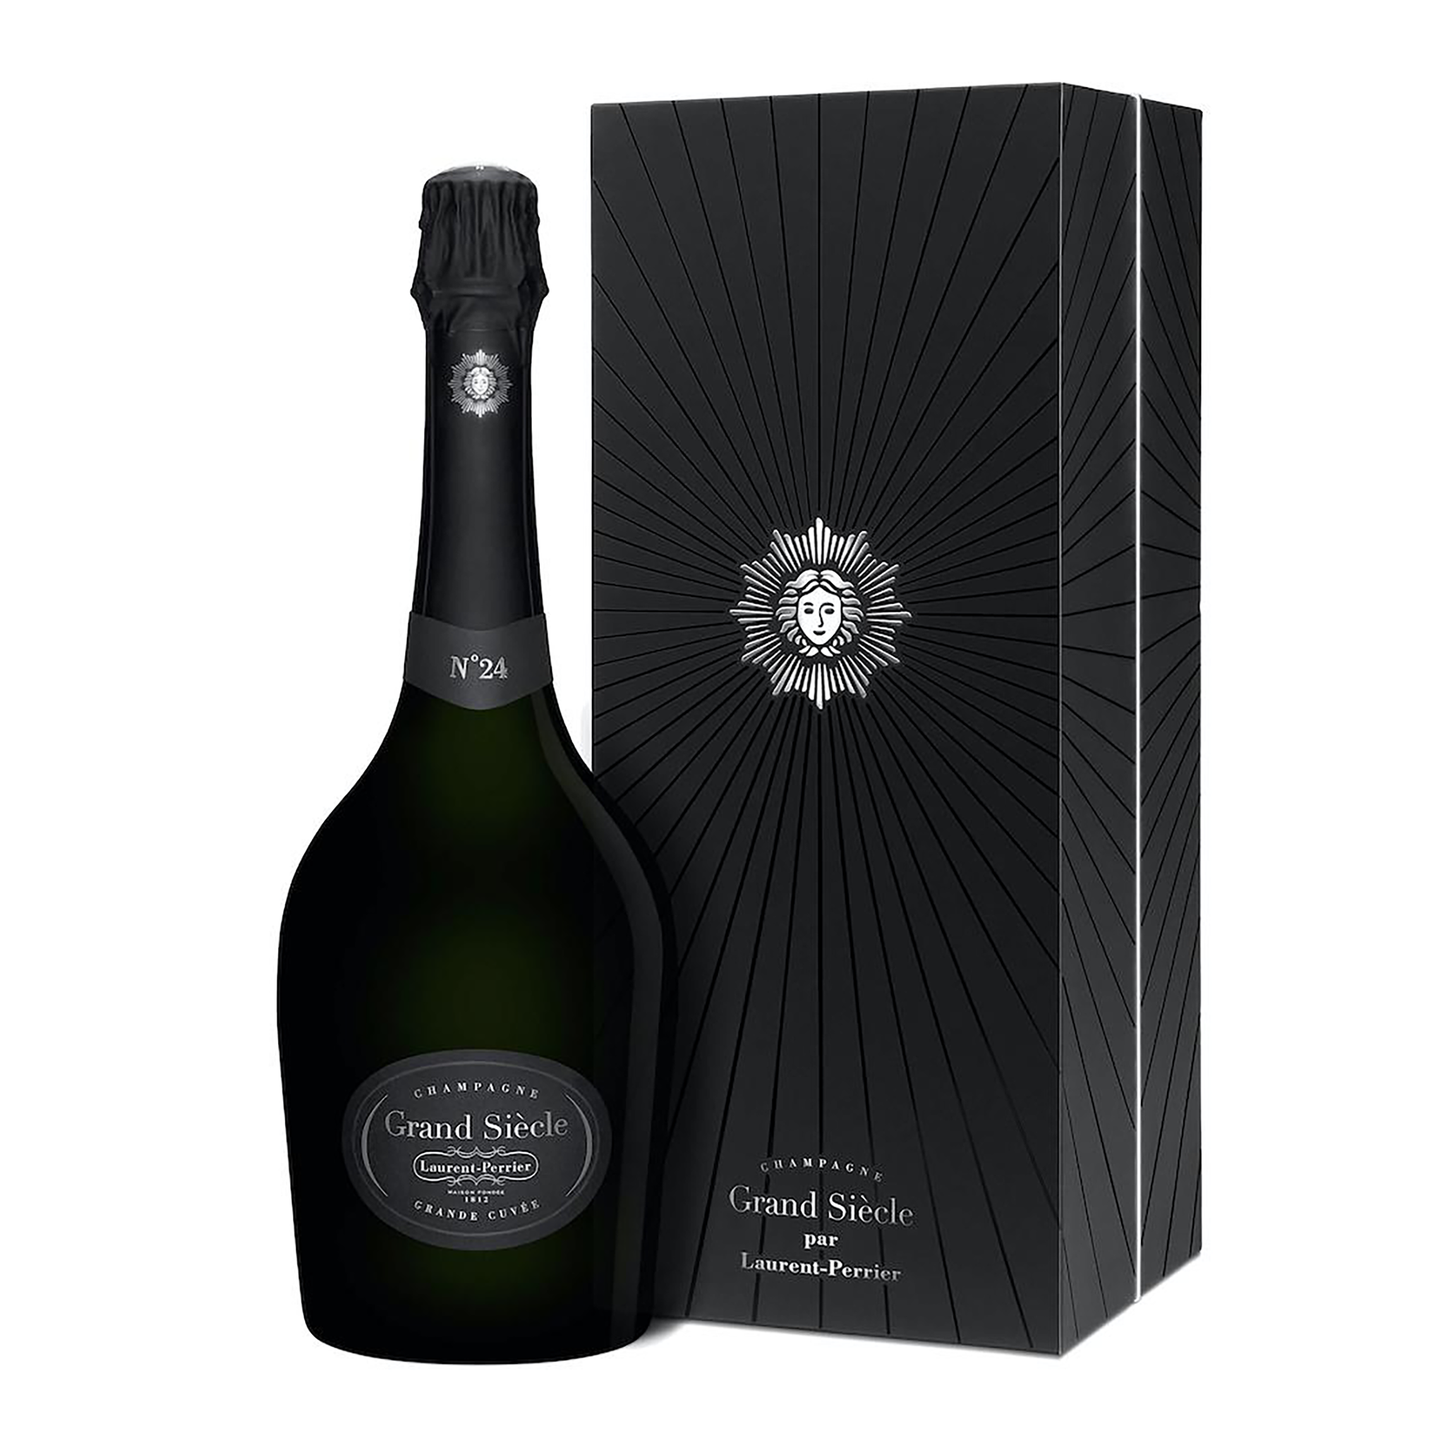 Laurent-Perrier Grand Siècle Nº24 Champagne